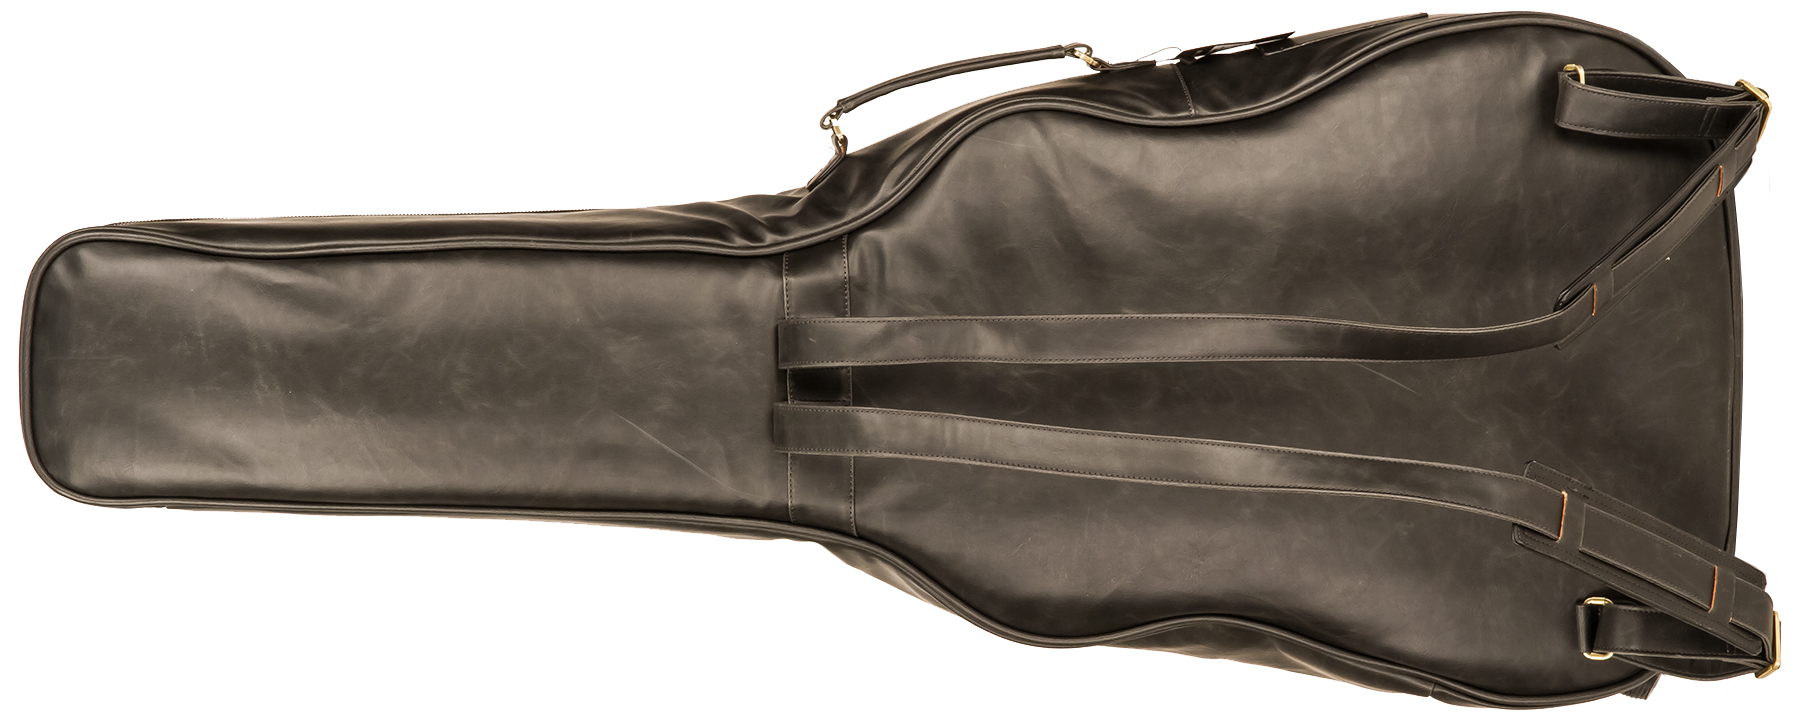 X-tone 2035 Fol-bk Deluxe Leather Acoustic Dreadnought Guitar Bag Cuir Matt Black (ex 2067) - Bolsa para guitarra acústica - Variation 1